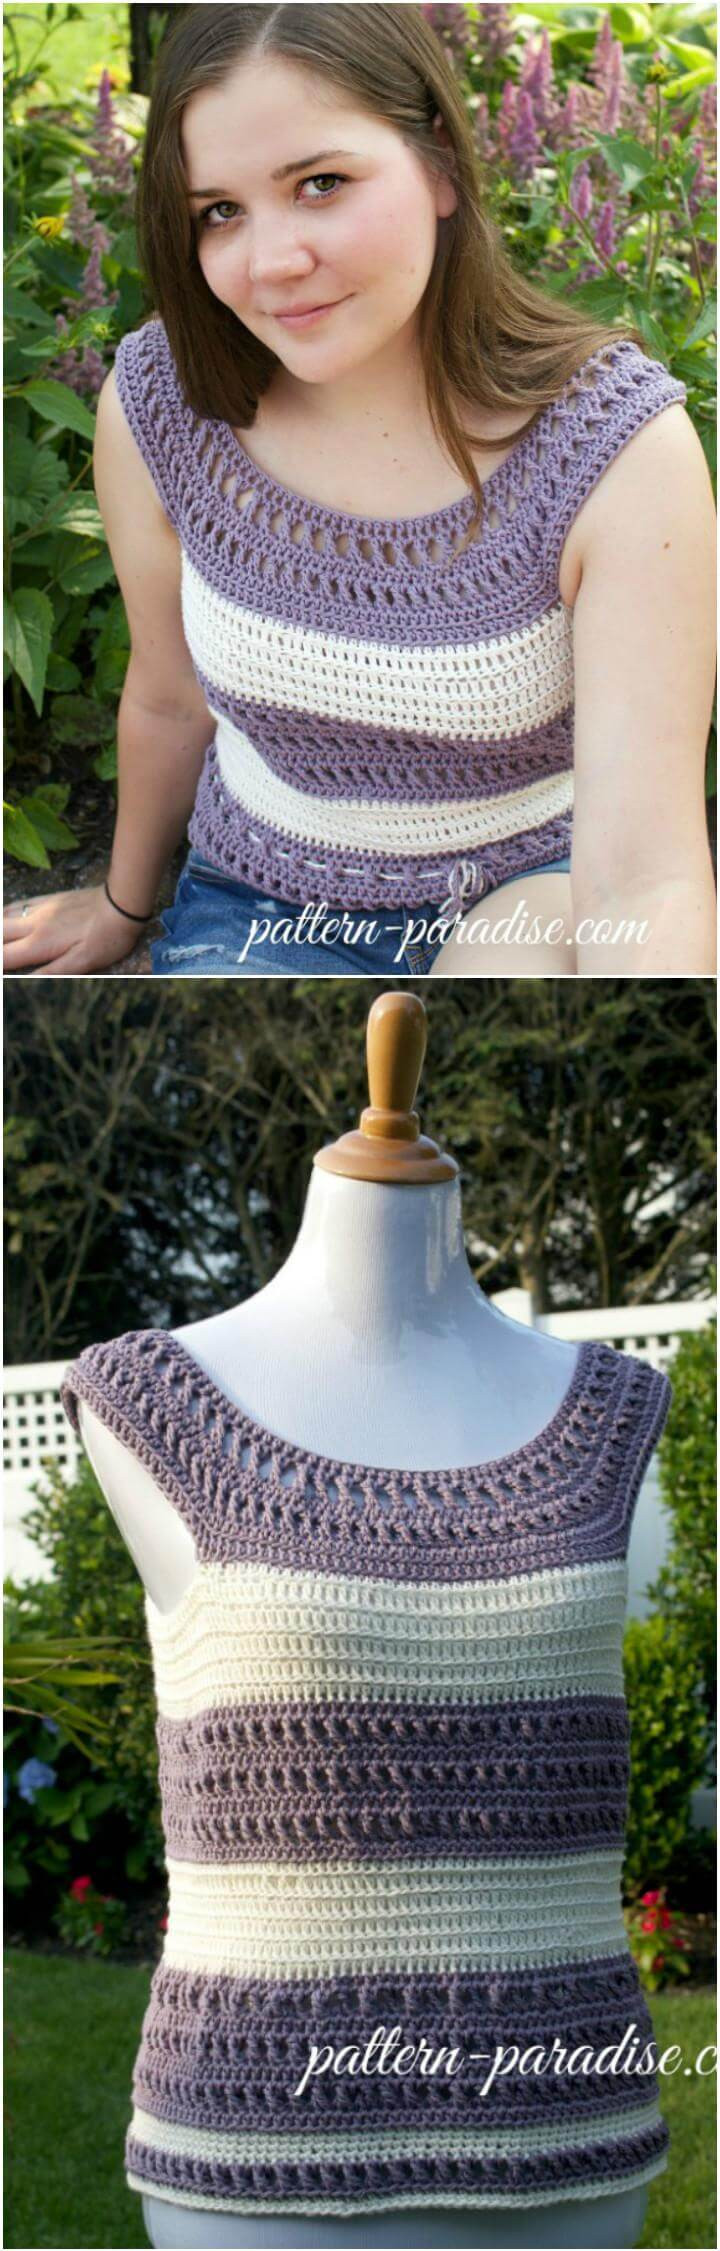 Crocheting Ideas For Summer
 50 Quick & Easy Crochet Summer Tops Free Patterns DIY